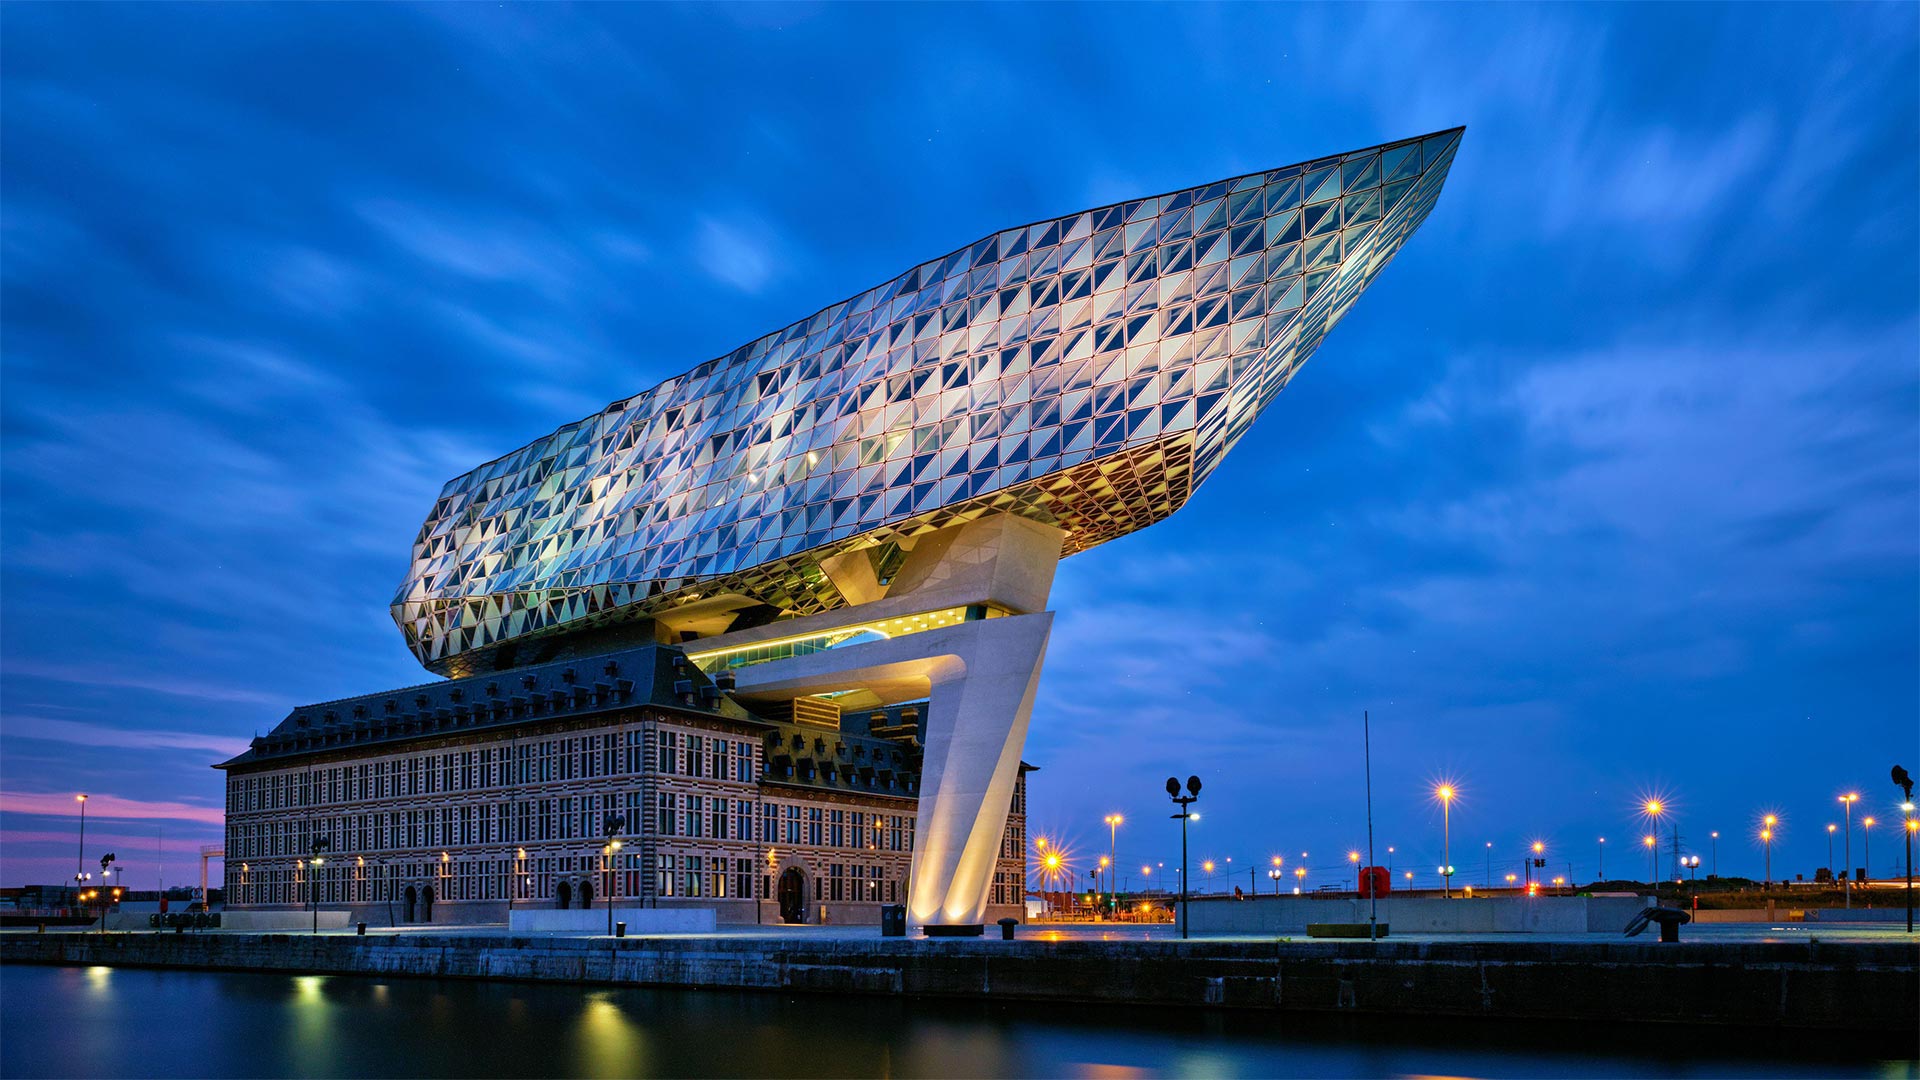 Port House designed by Zaha Hadid Architects